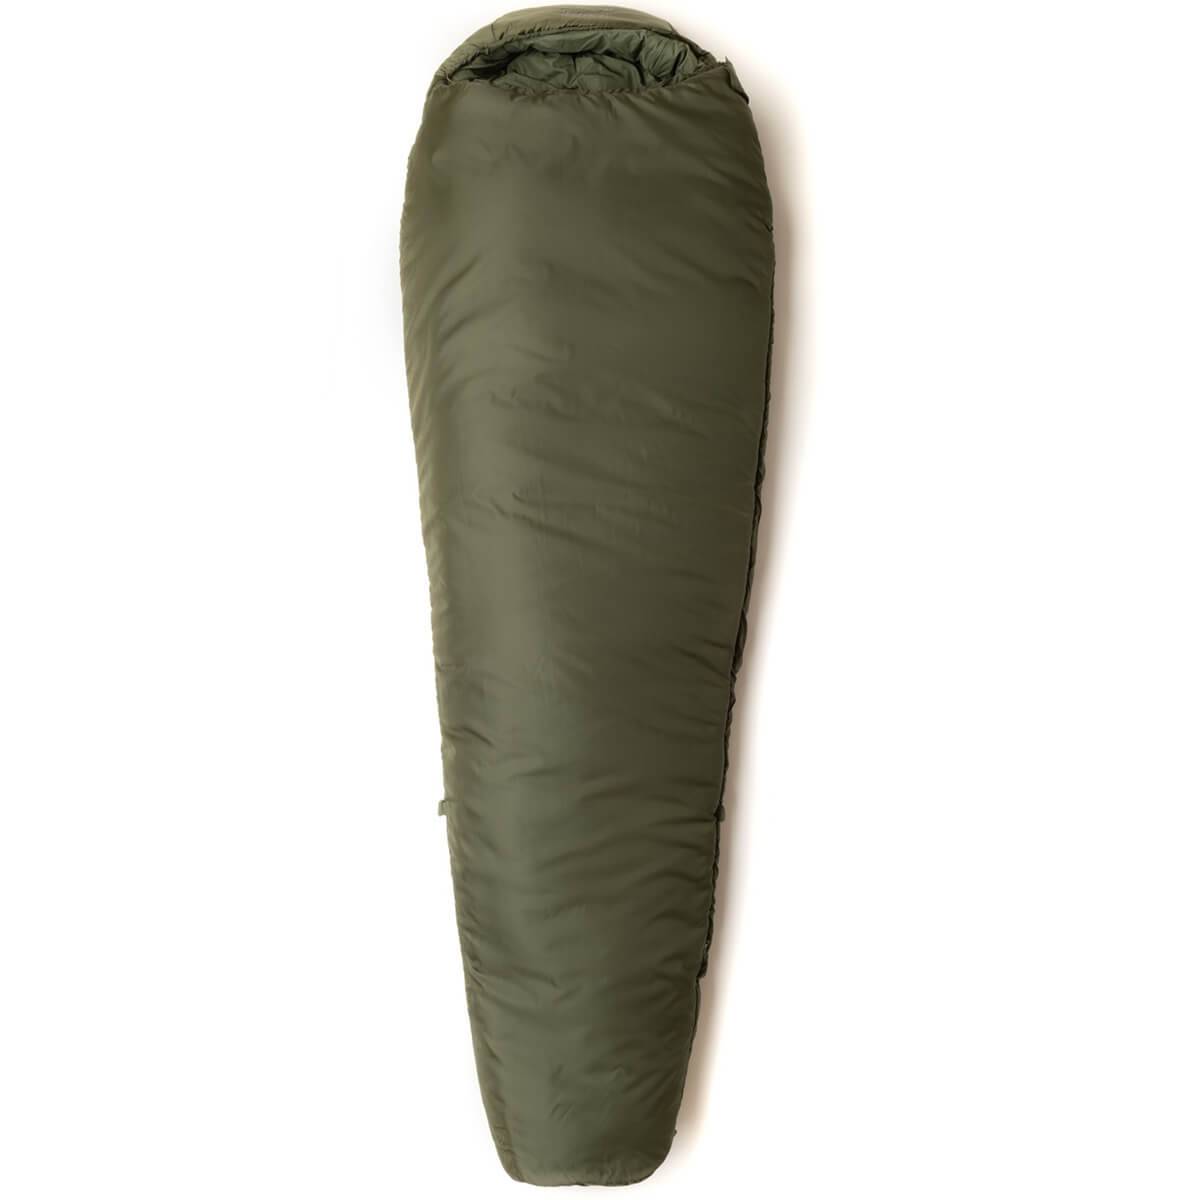 Snugpak Softie Elite 4 Sleeping Bag Olive Green - John Bull Clothing